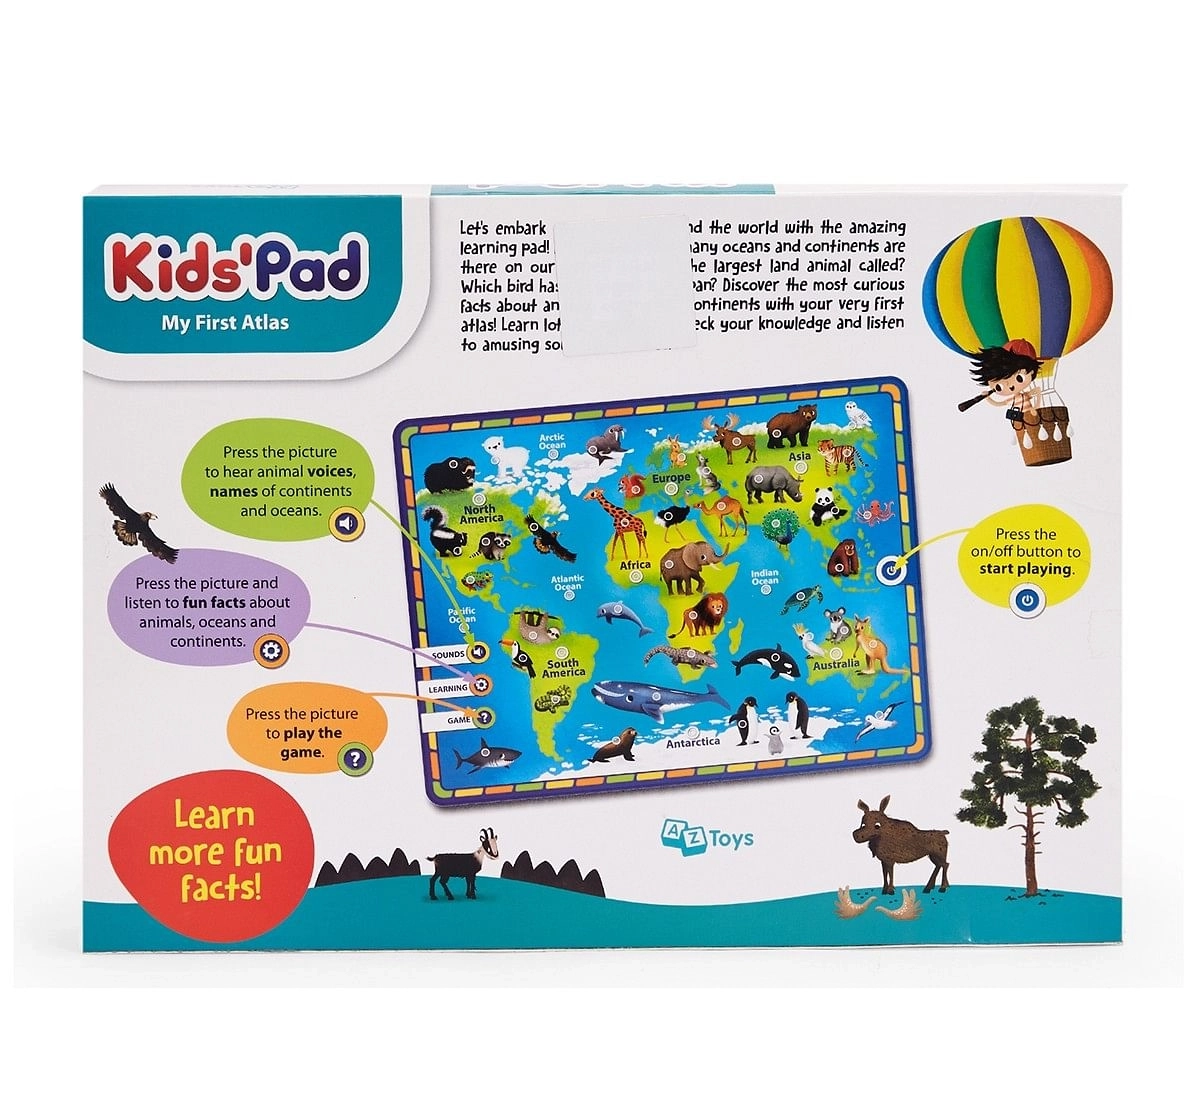 Comdaq AZ Kids' Pad My First Atlas Learning Toy for Kids age 3Y+ (Green)